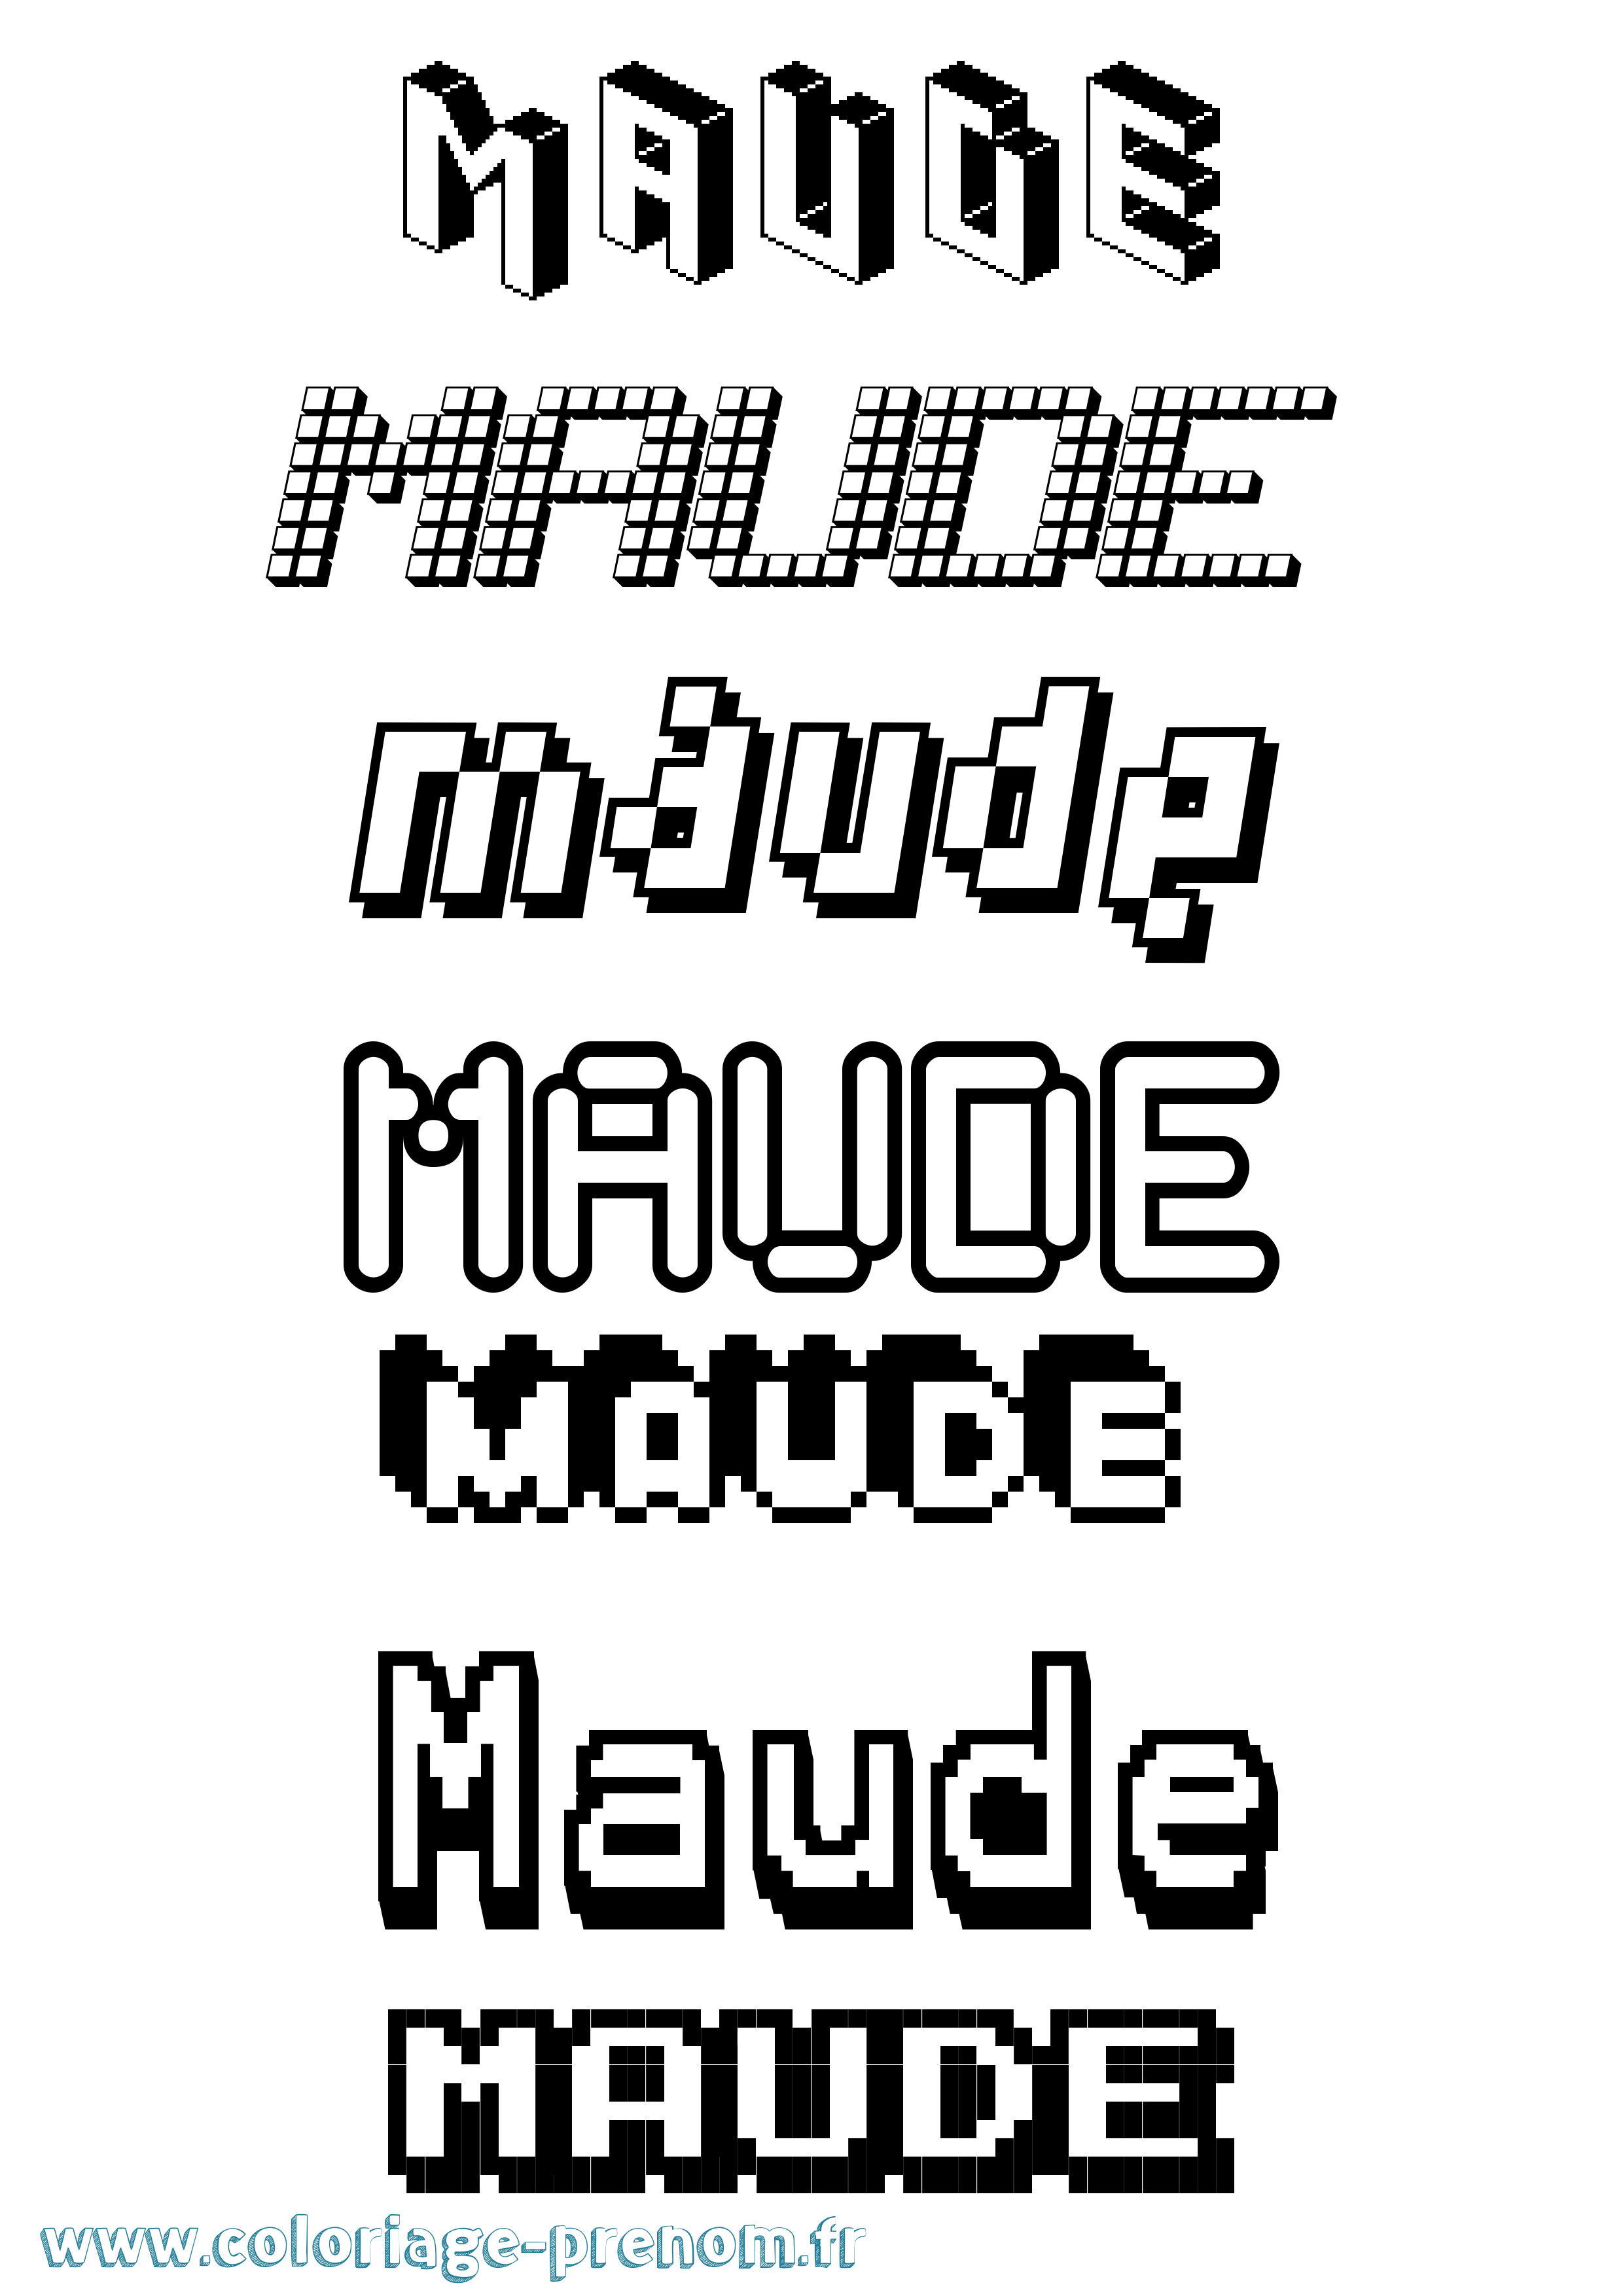 Coloriage prénom Maude Pixel